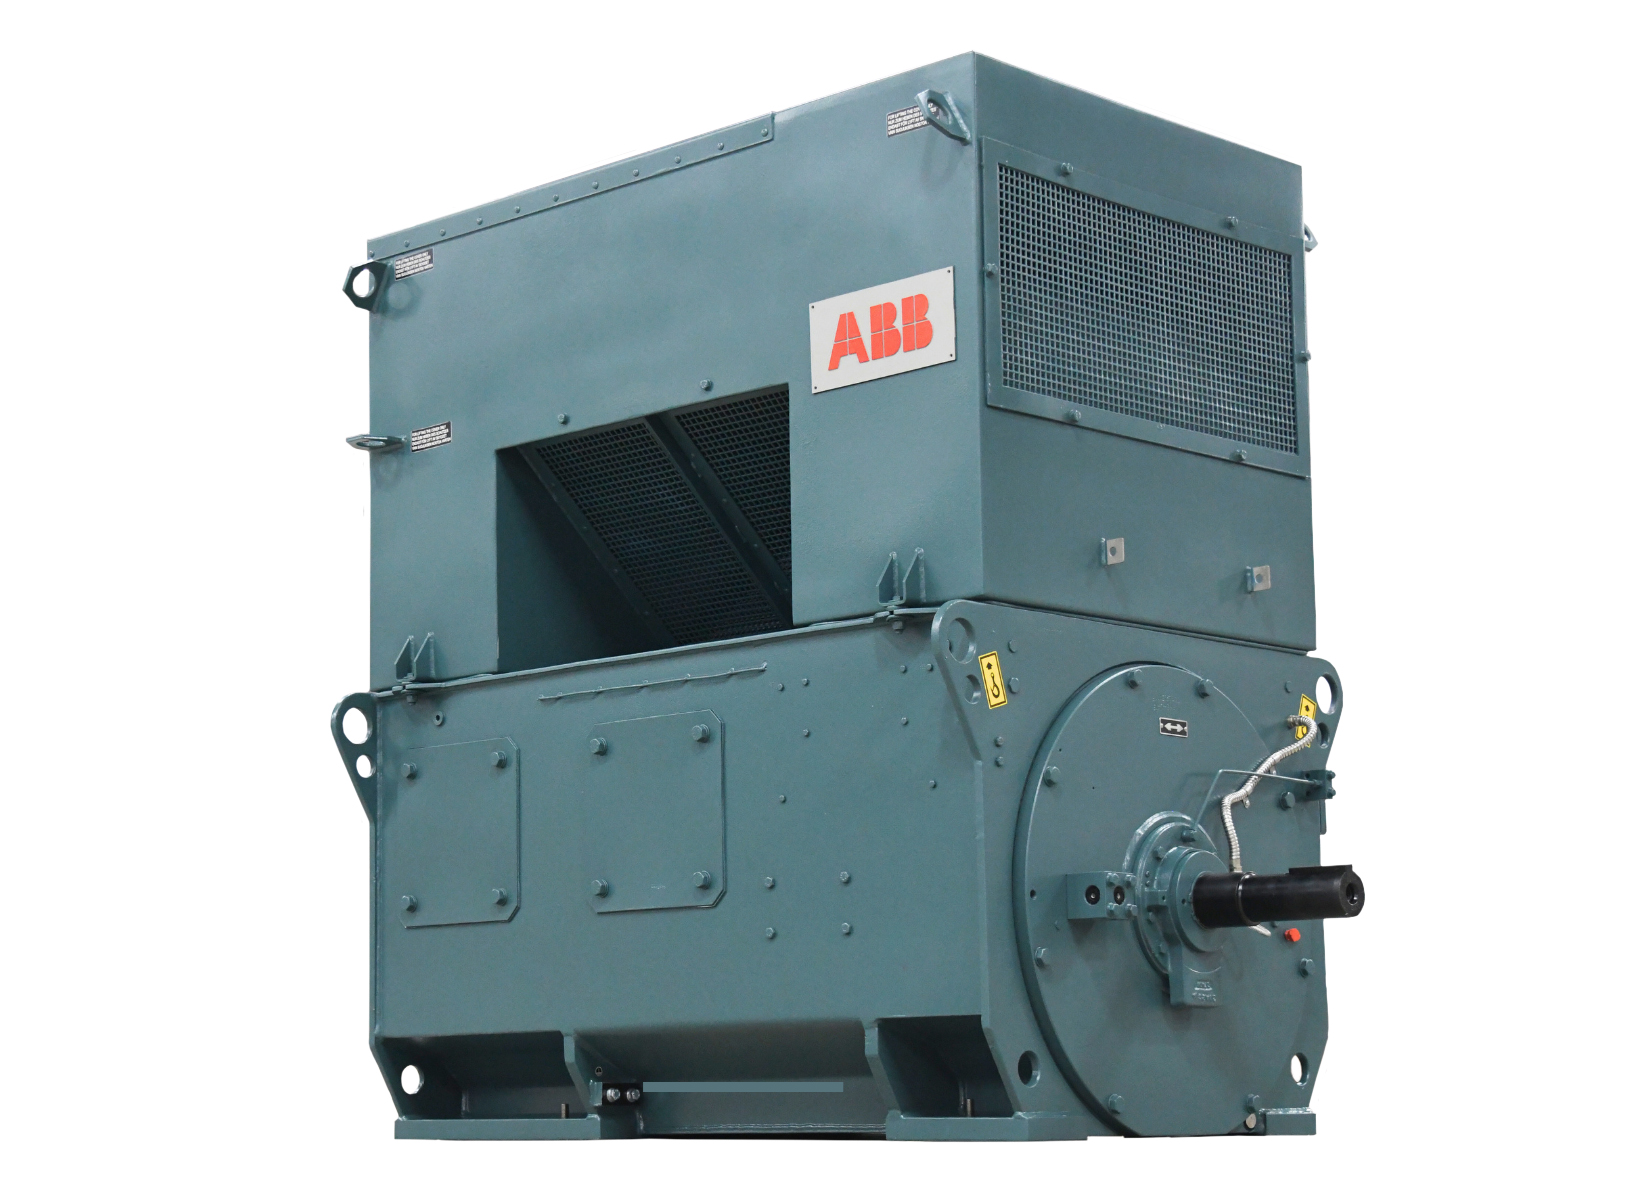 New energy-efficient NEMA motor from ABB - International Mining